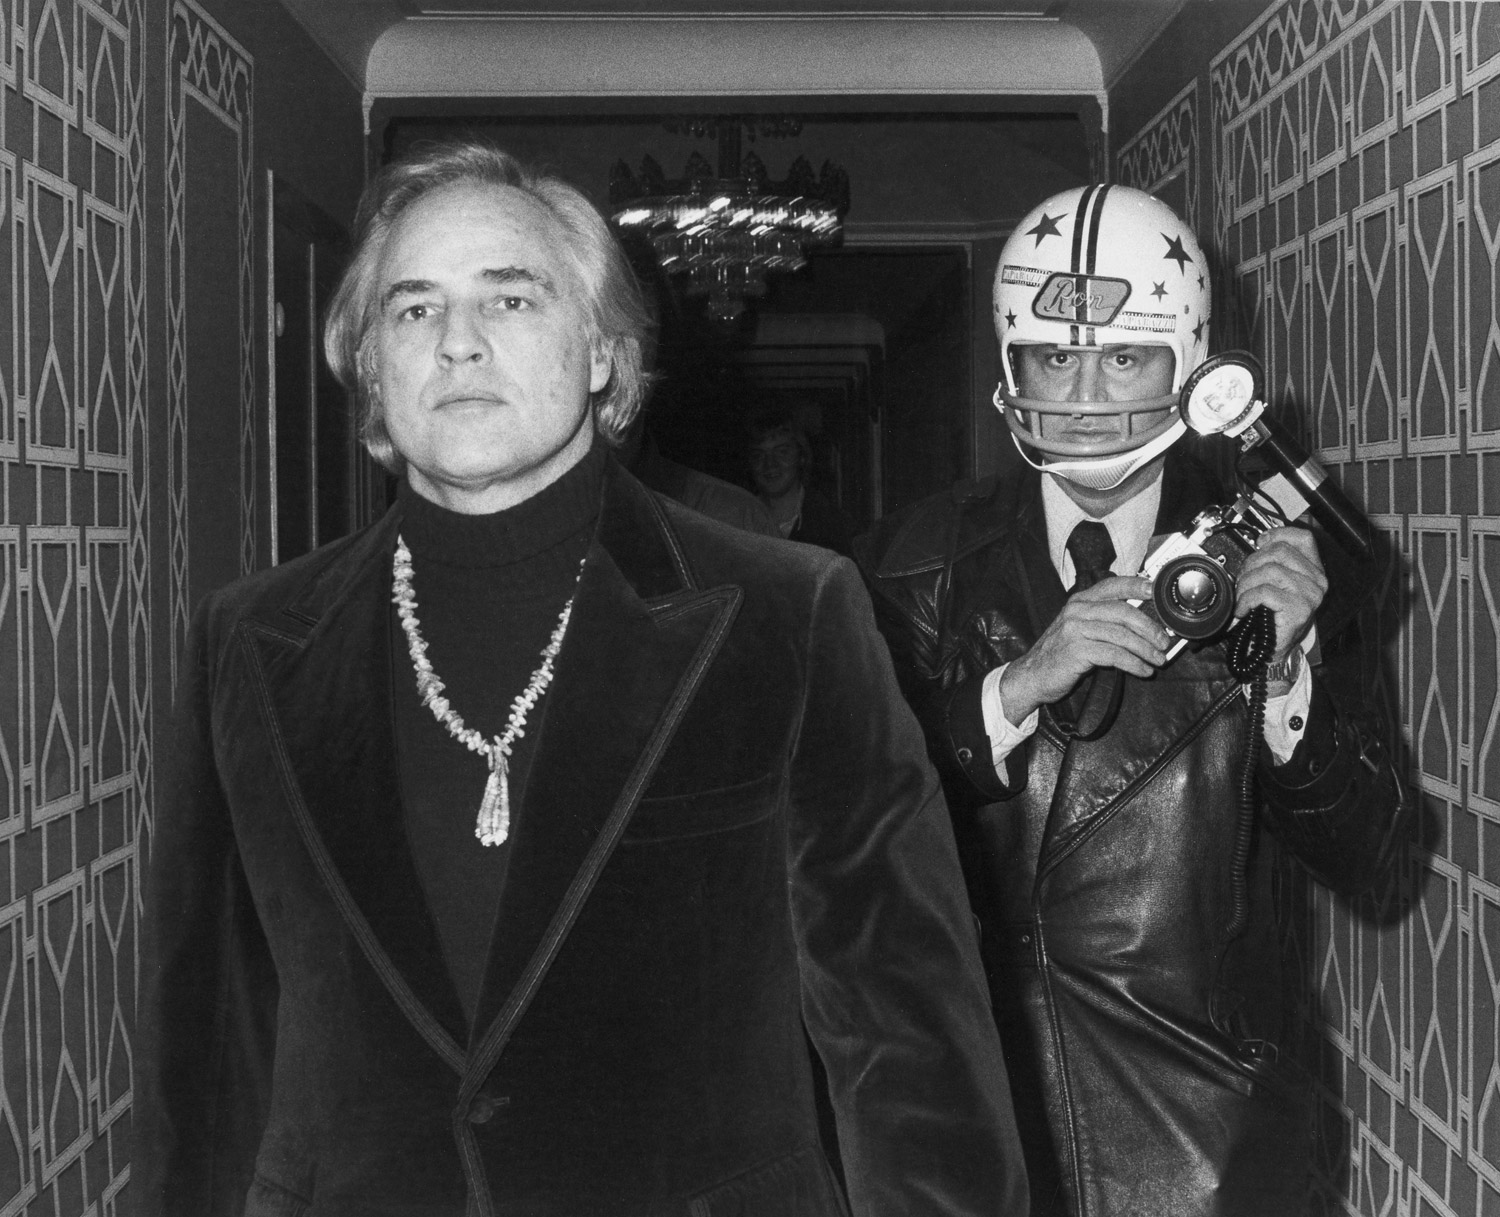 Marlon Brando and Ron Galella wearing a football helmet at the Waldorf Astoria Hotel. Nov. 26, 1974